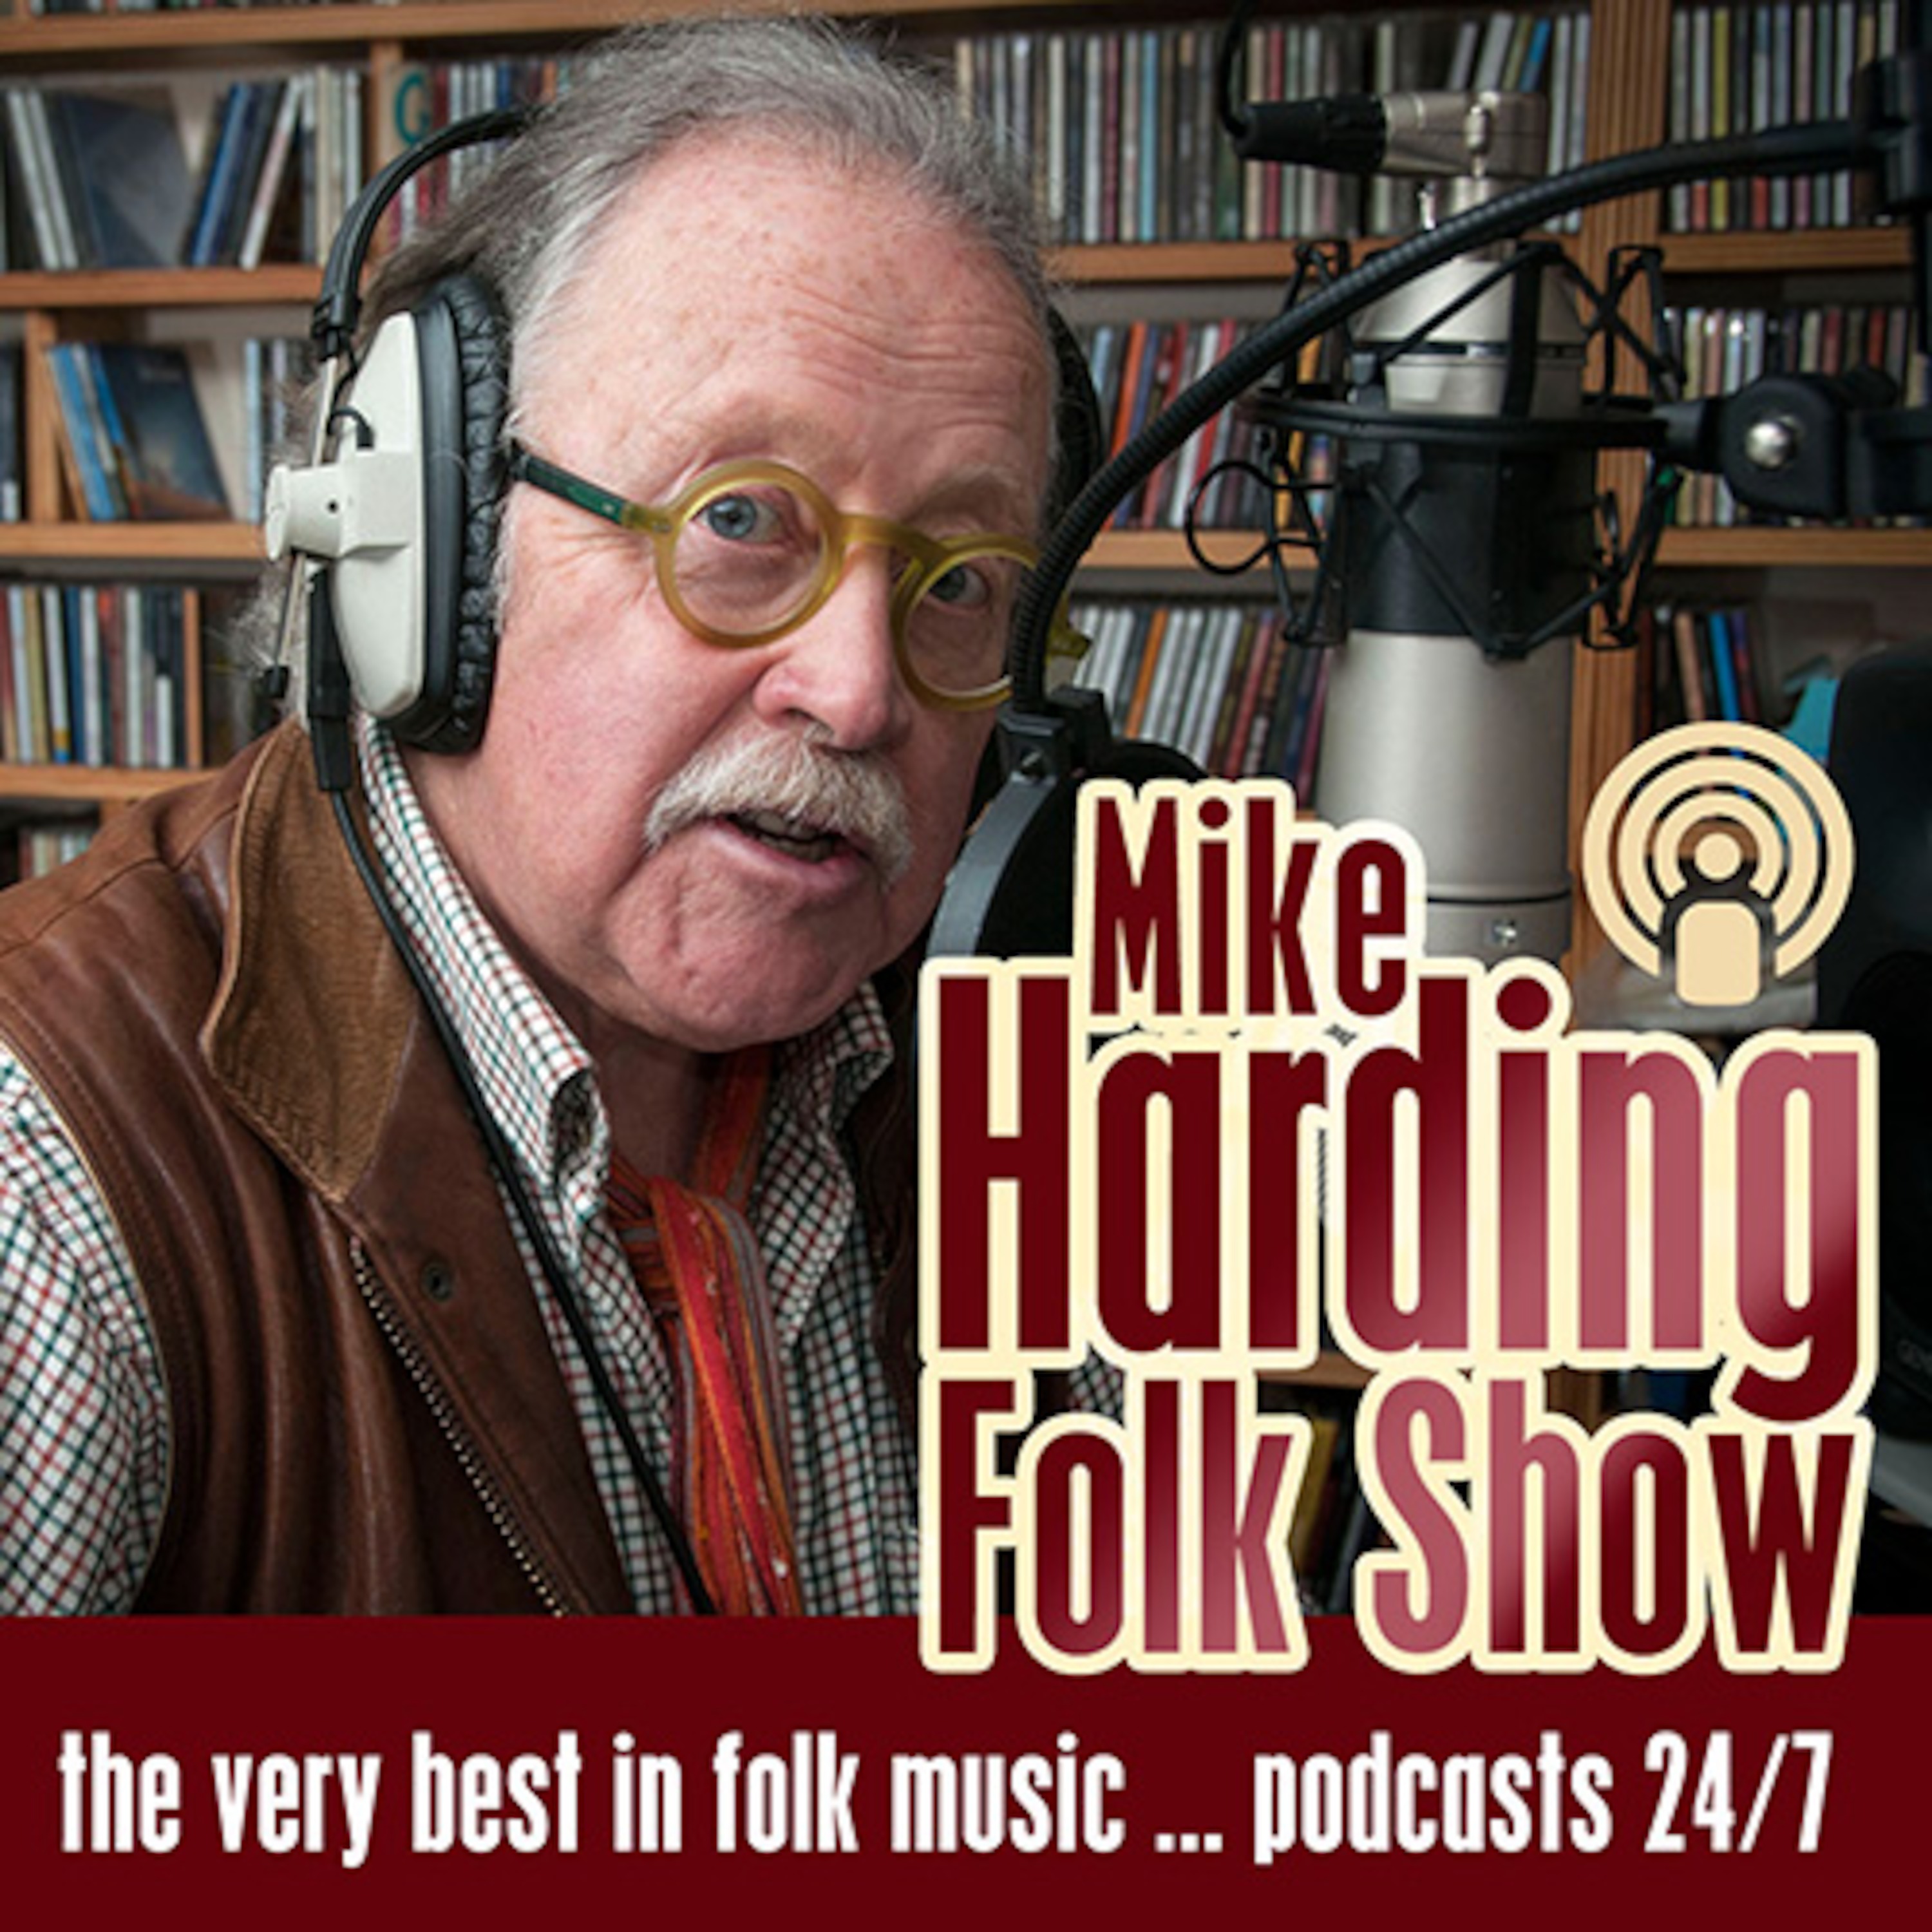 Mike Harding Folk Show 222